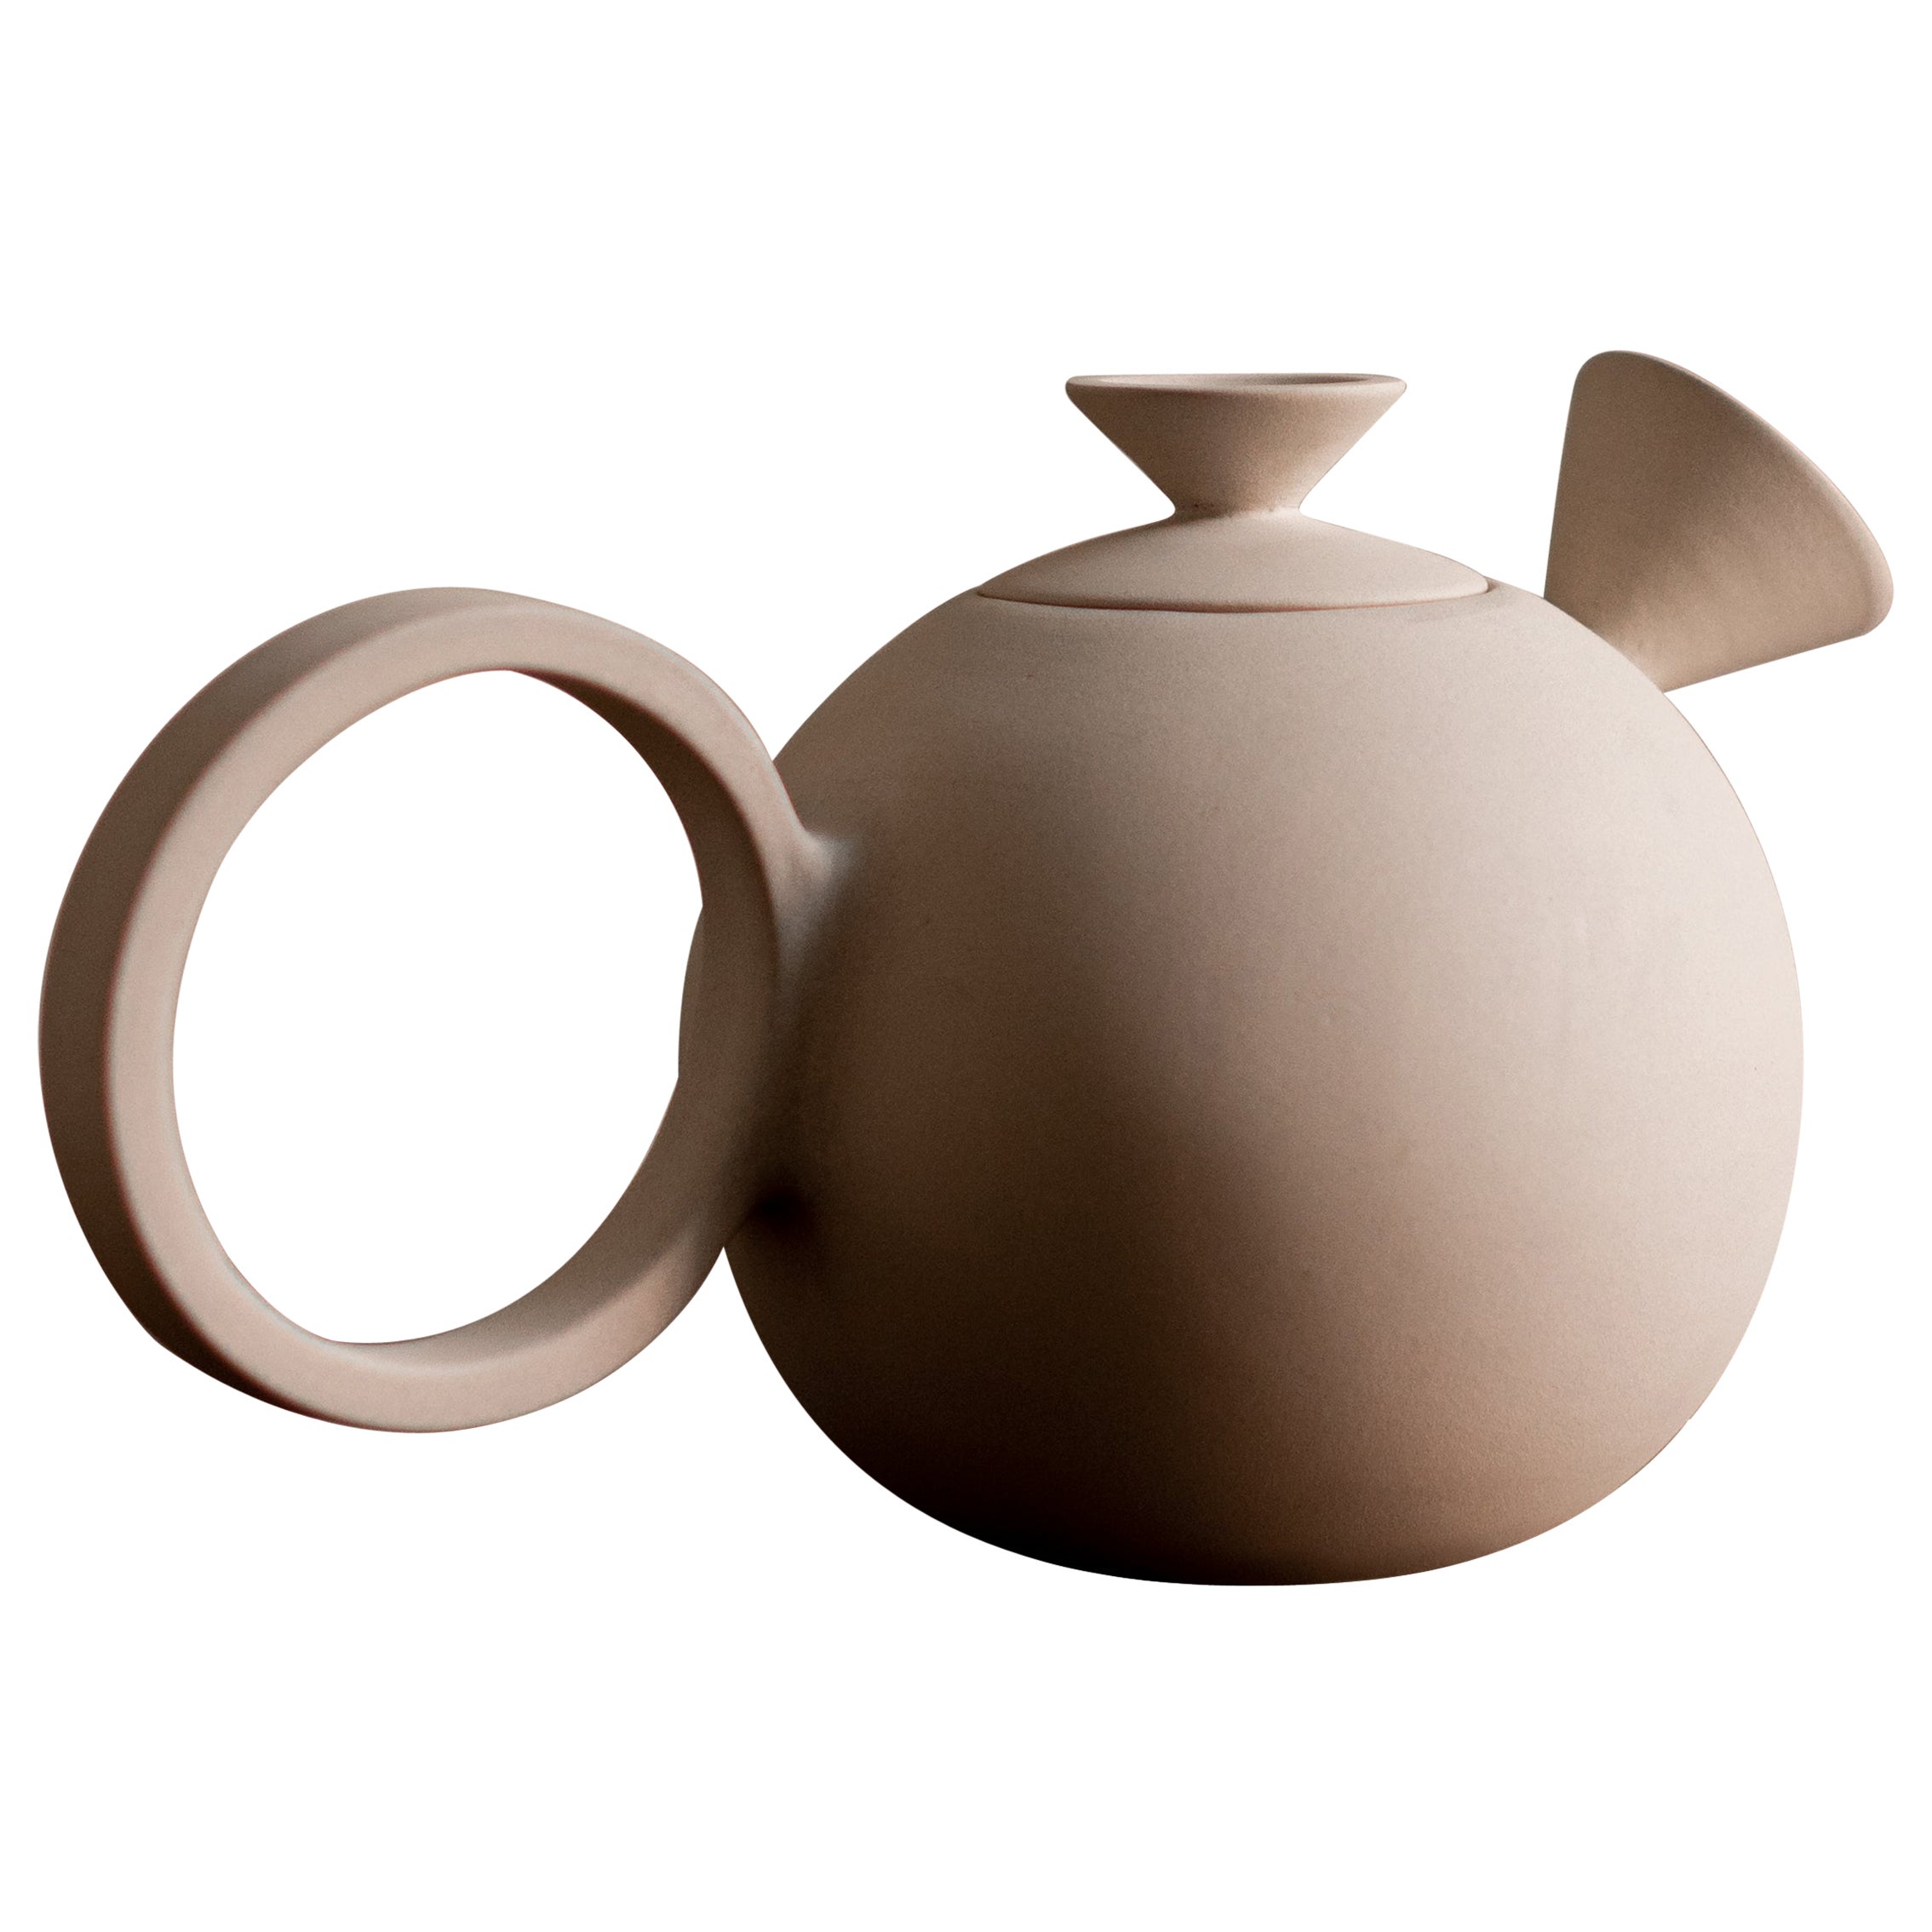 Euclid Teapot by Eter Design